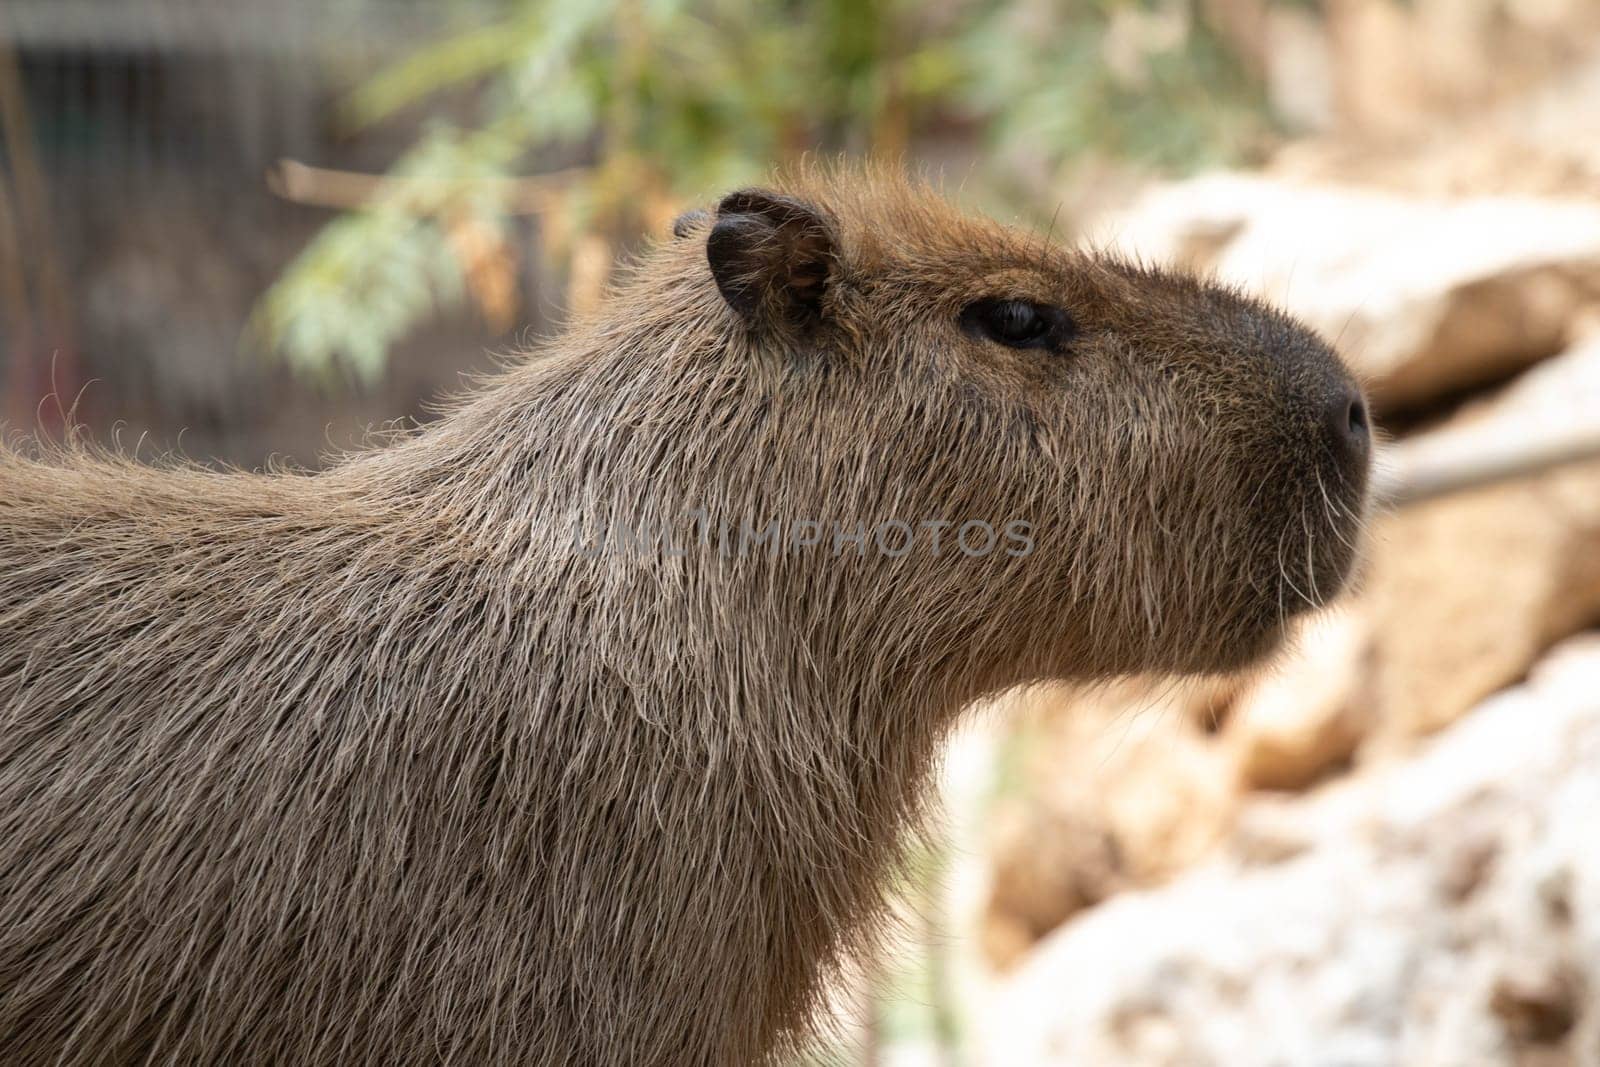 Capybara herbivore of South America by gordiza